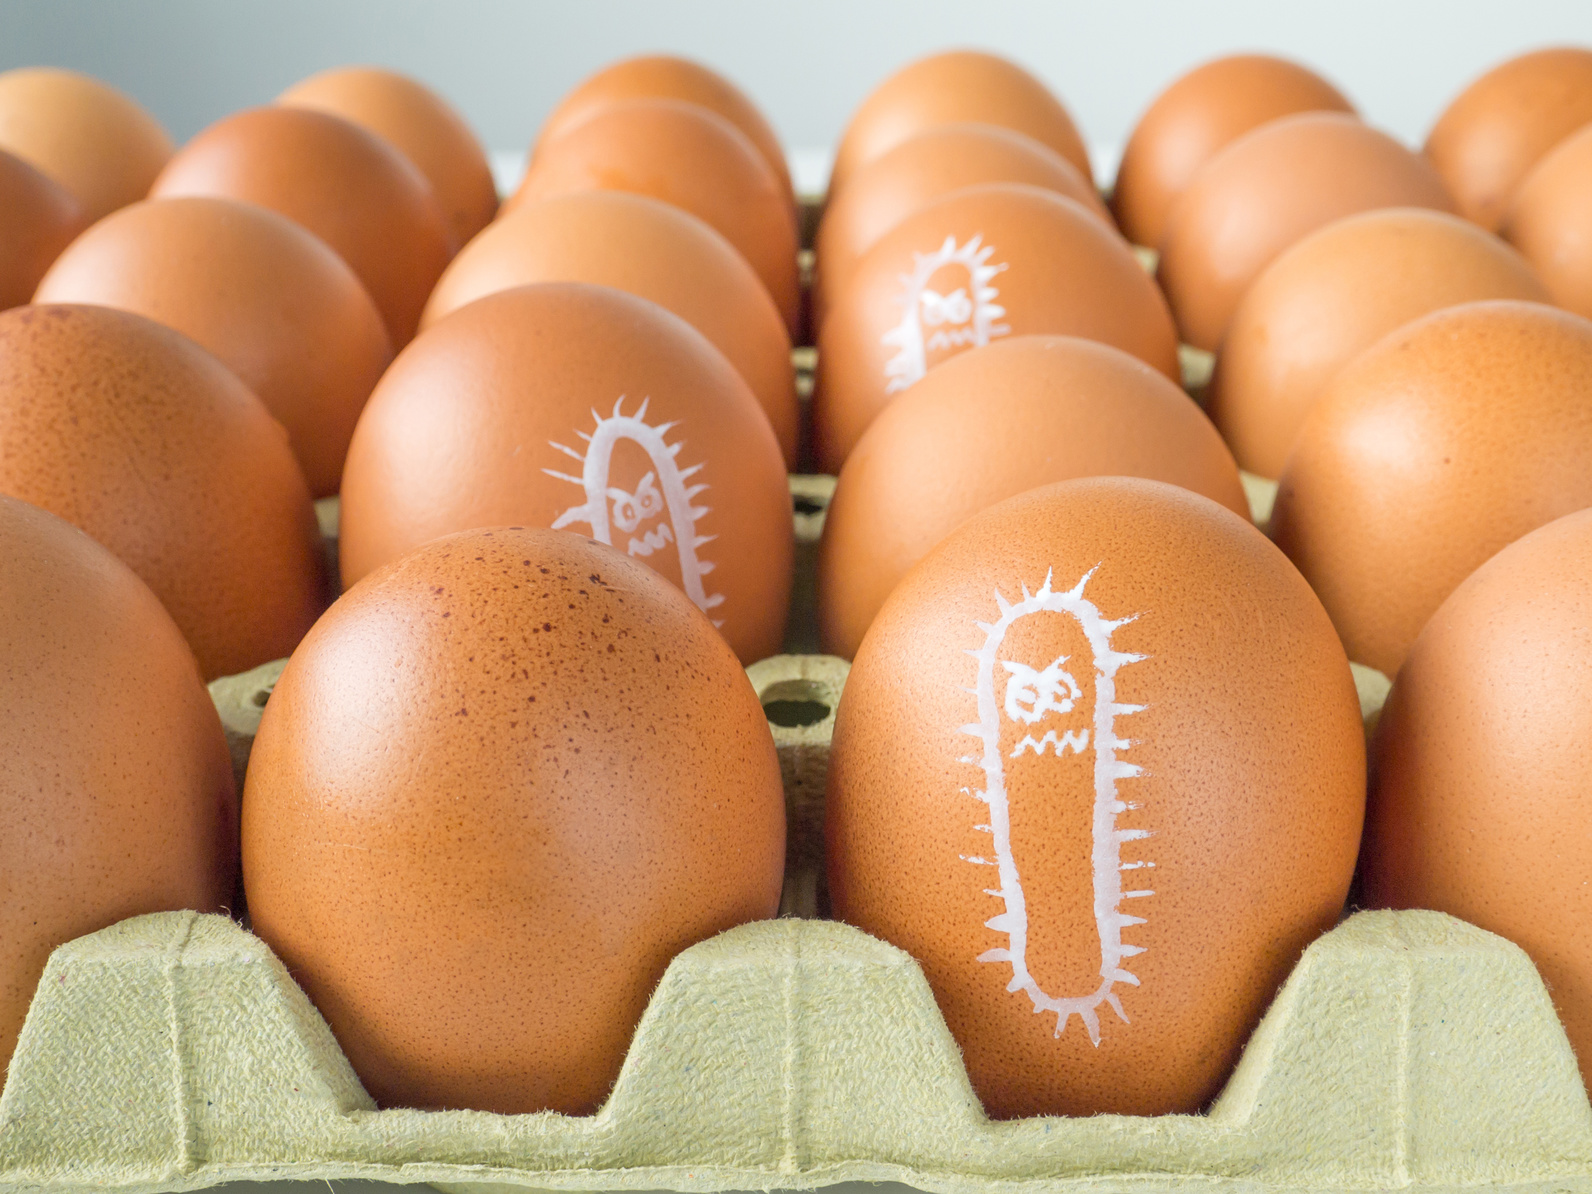 Uova, Salmonella bacterium drawn on eggs